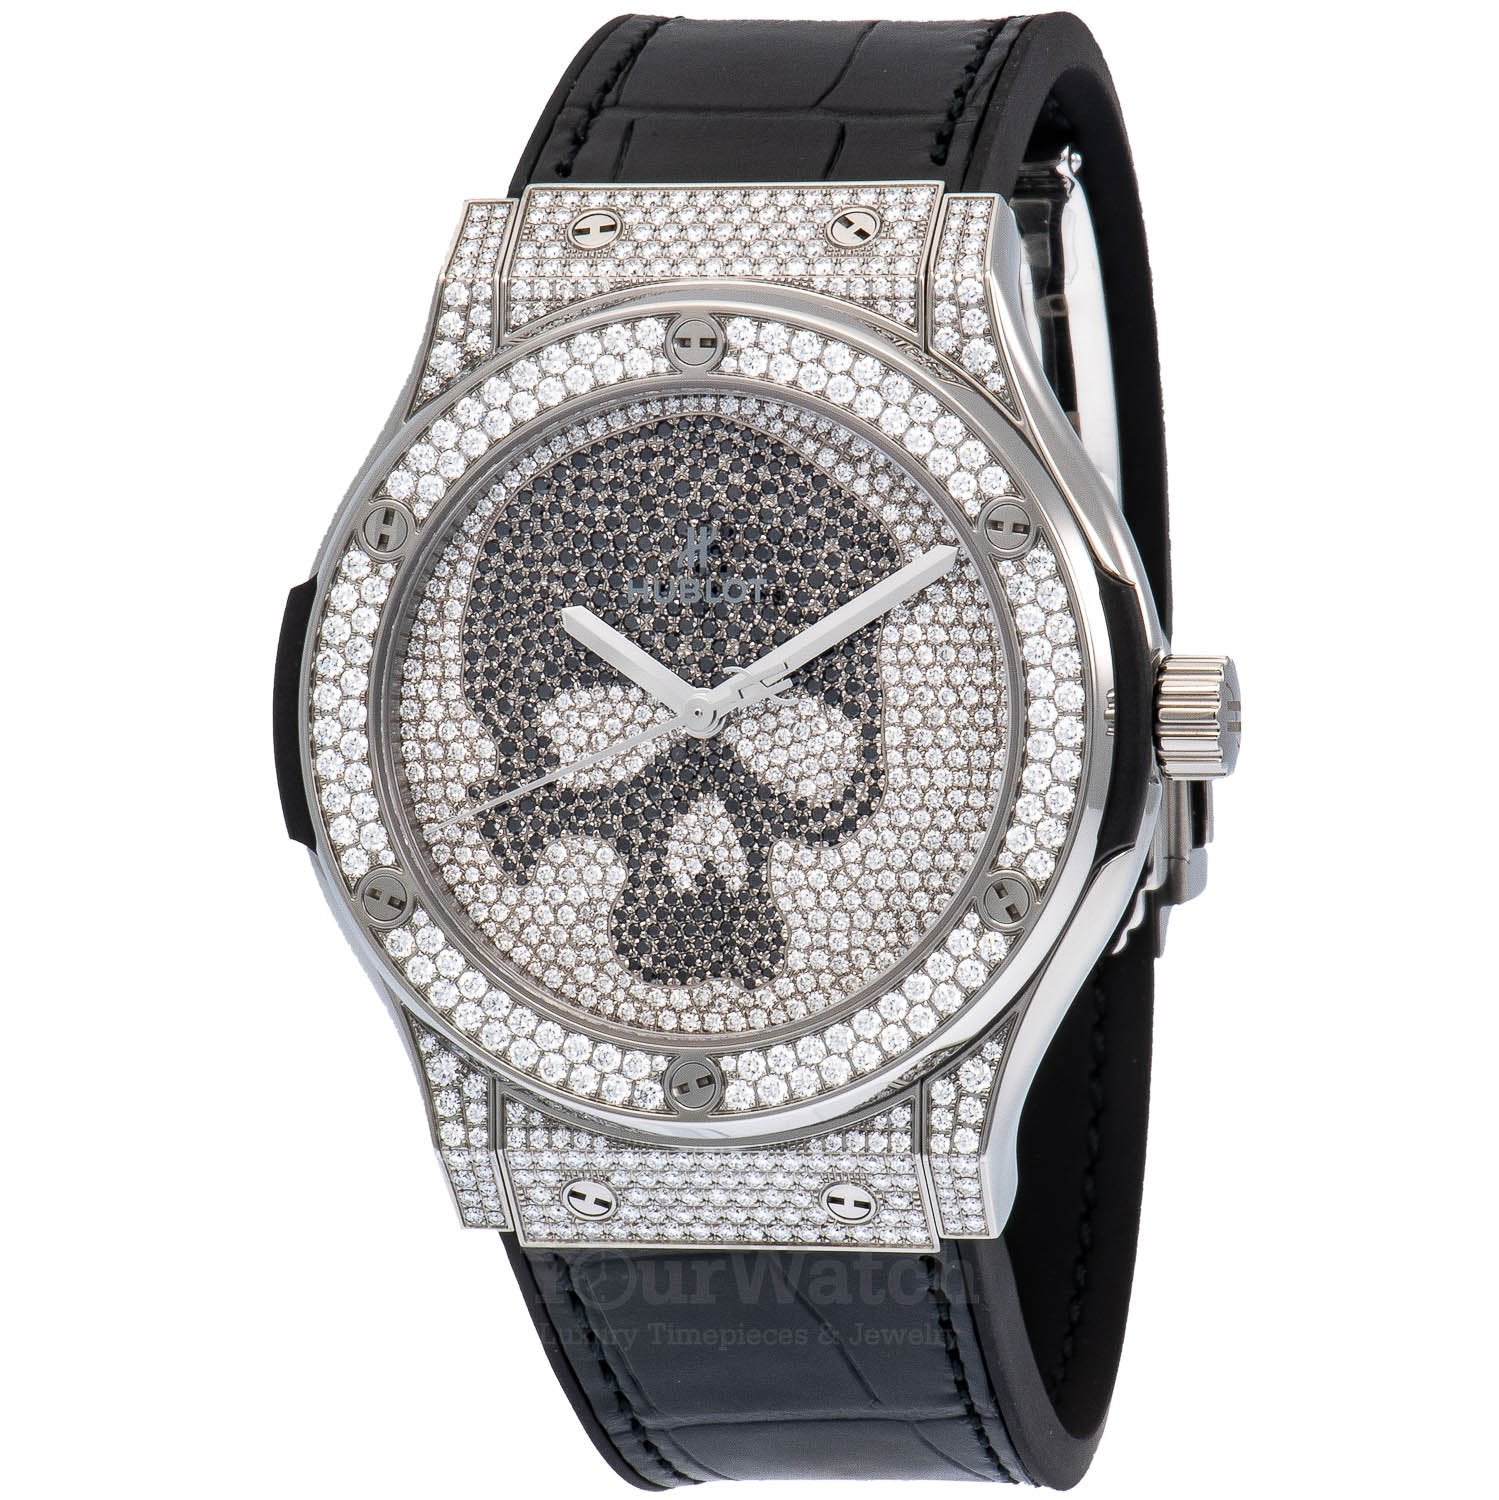 Classic Fusion Titanium Skull Full Pave 45mm Men's Watch 511.NX.9000.LR.1704.SKULL 